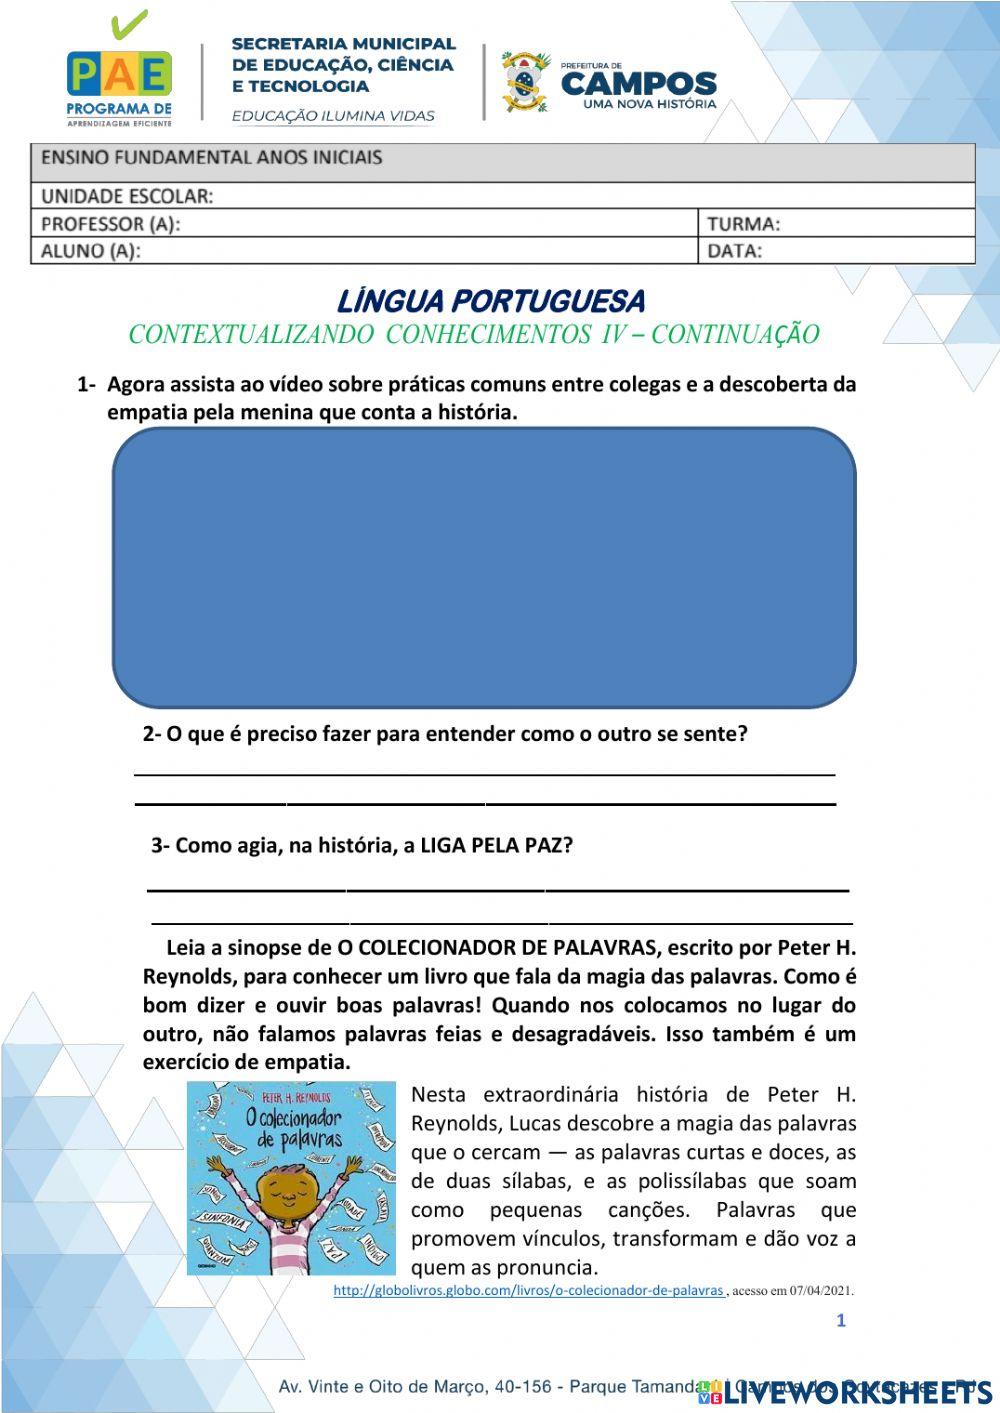 Semana 4 - Língua Portuguesa - 2º atividade - EMCAPO - 5º ano